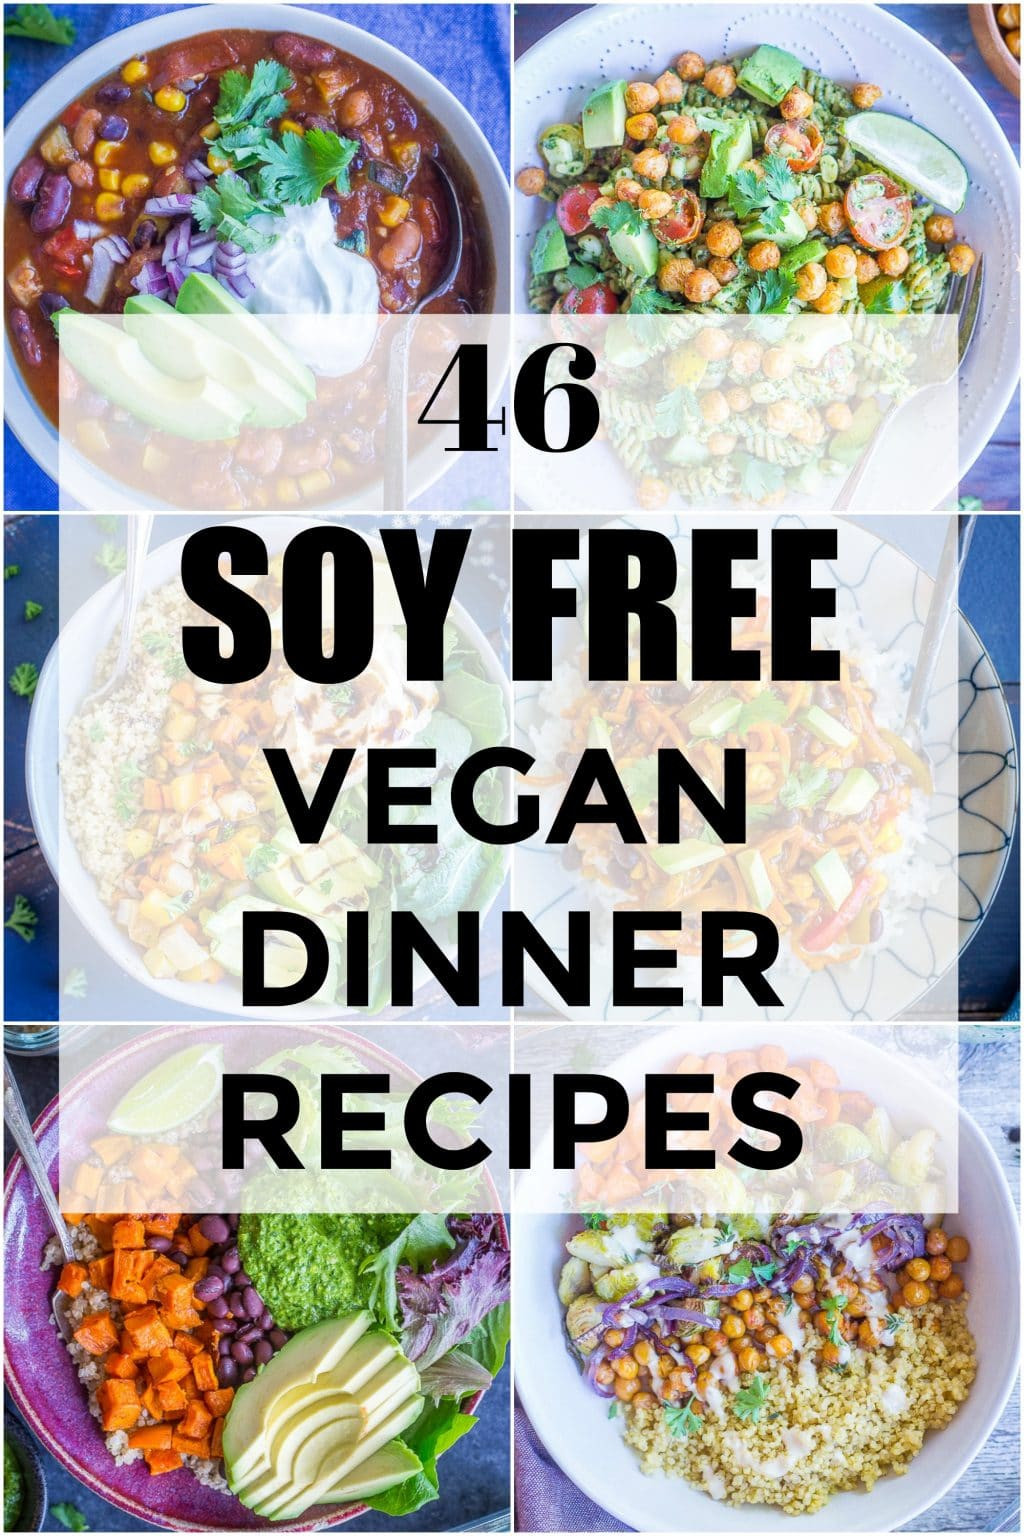 Soy Free Vegan Recipes Unique 46 soy Free Vegan Dinner Recipes She Likes Food